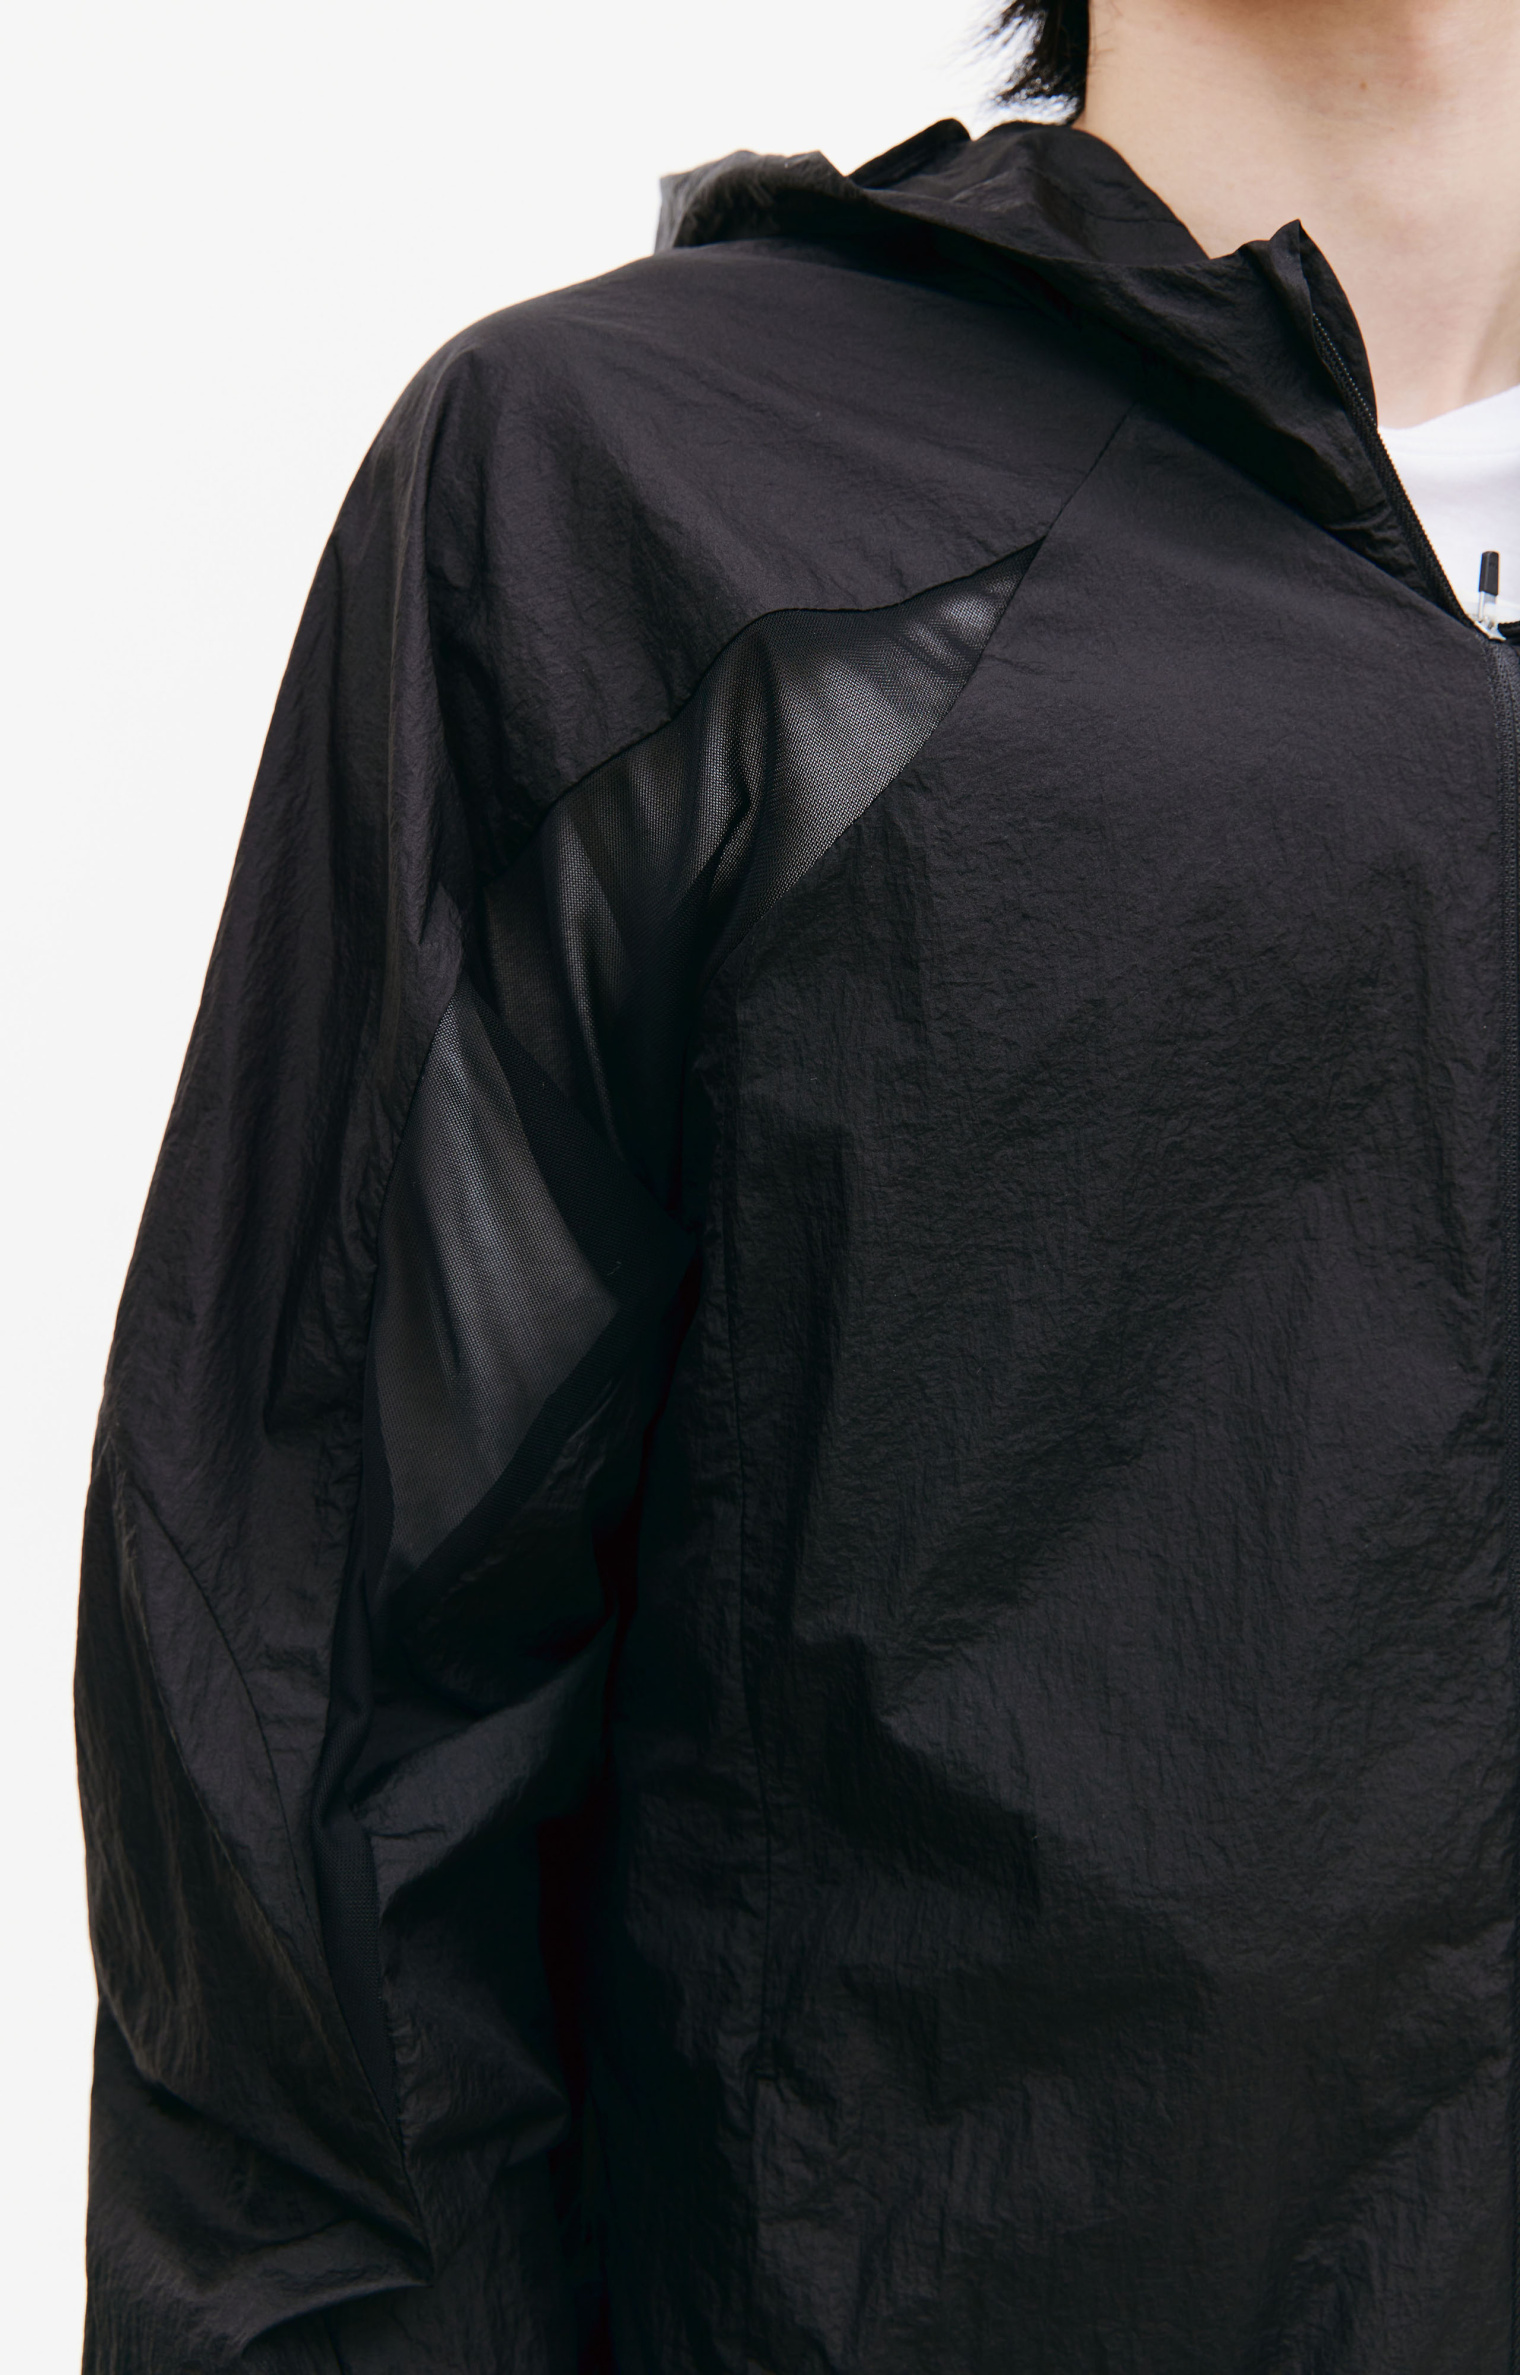 Post Archive Faction Black 5.0+ technical jacket